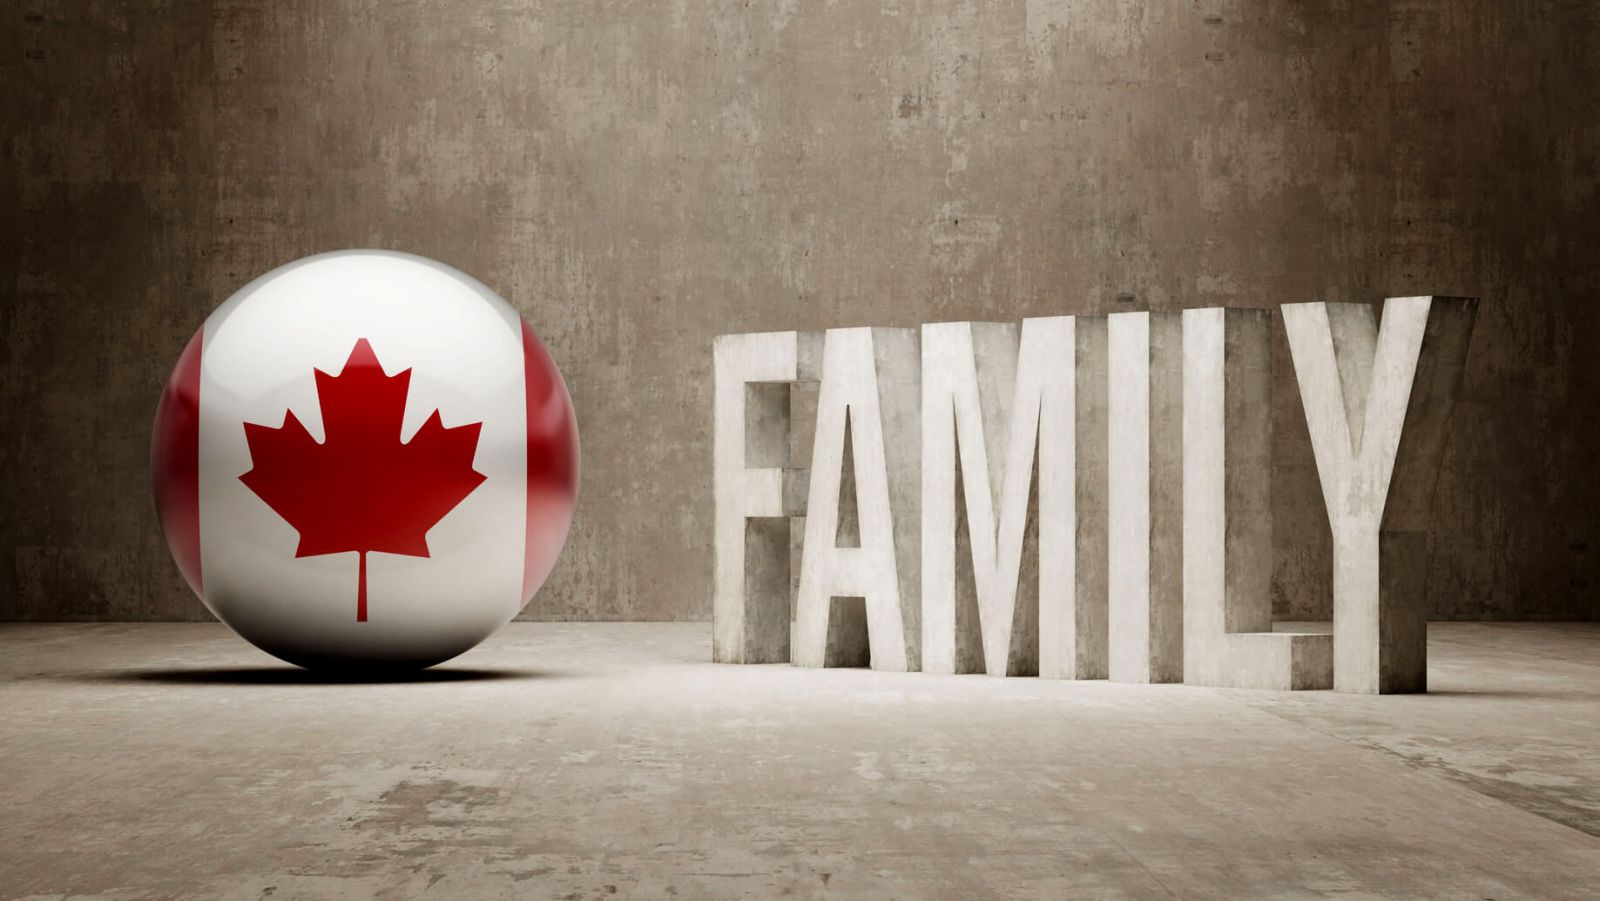 En 11 minutos se llenó cupo para traer padres o abuelos de inmigrantes a Canadá